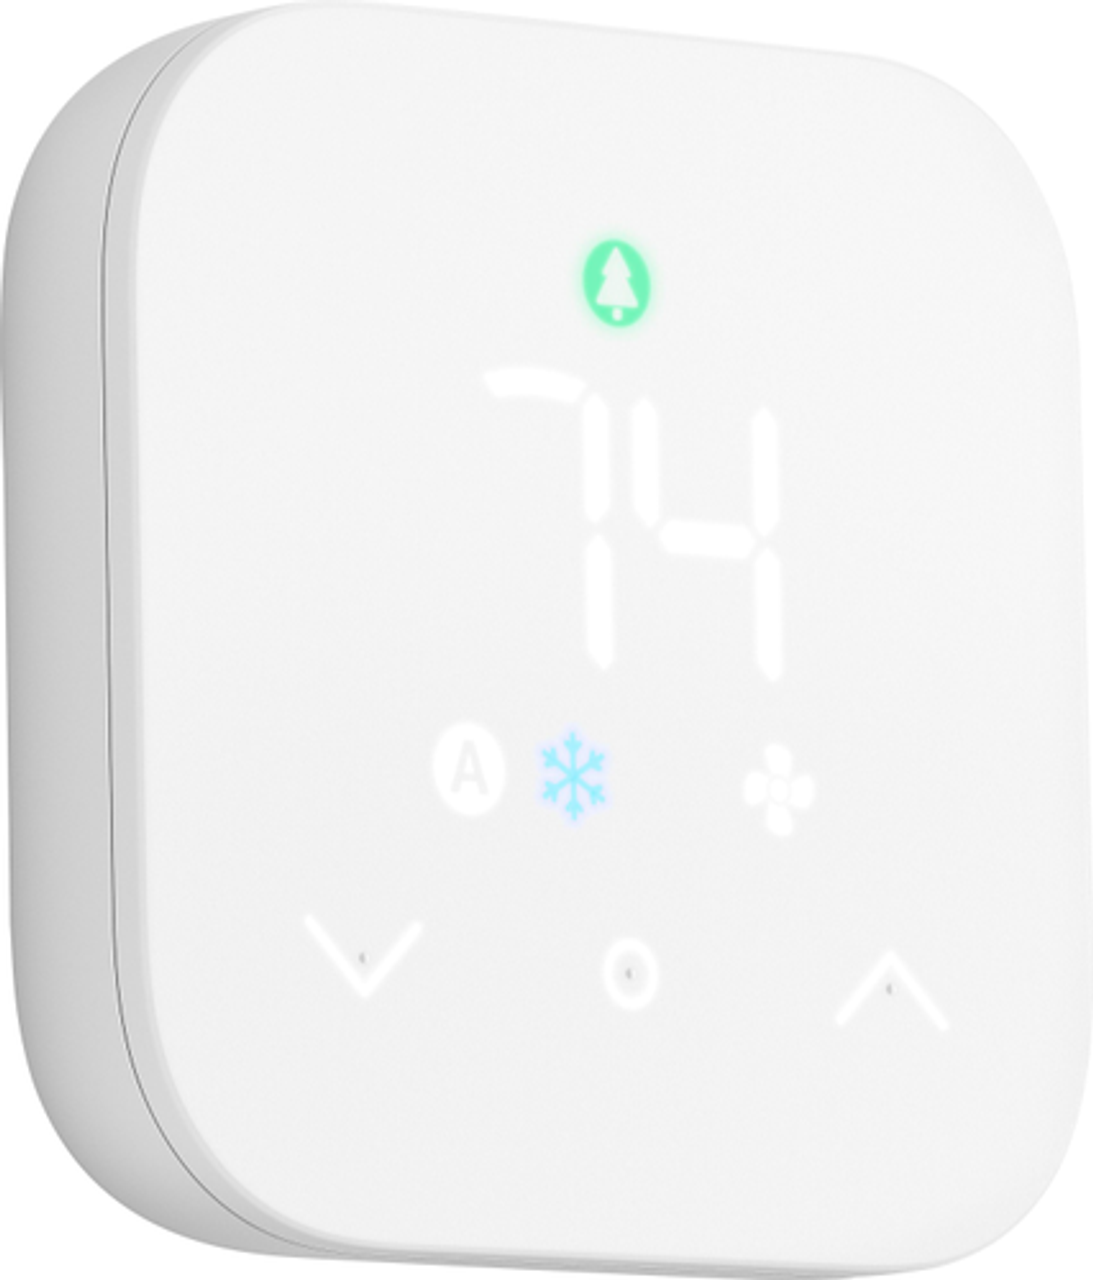 Amazon - Smart Programmable Thermostat with Alexa - WHITE